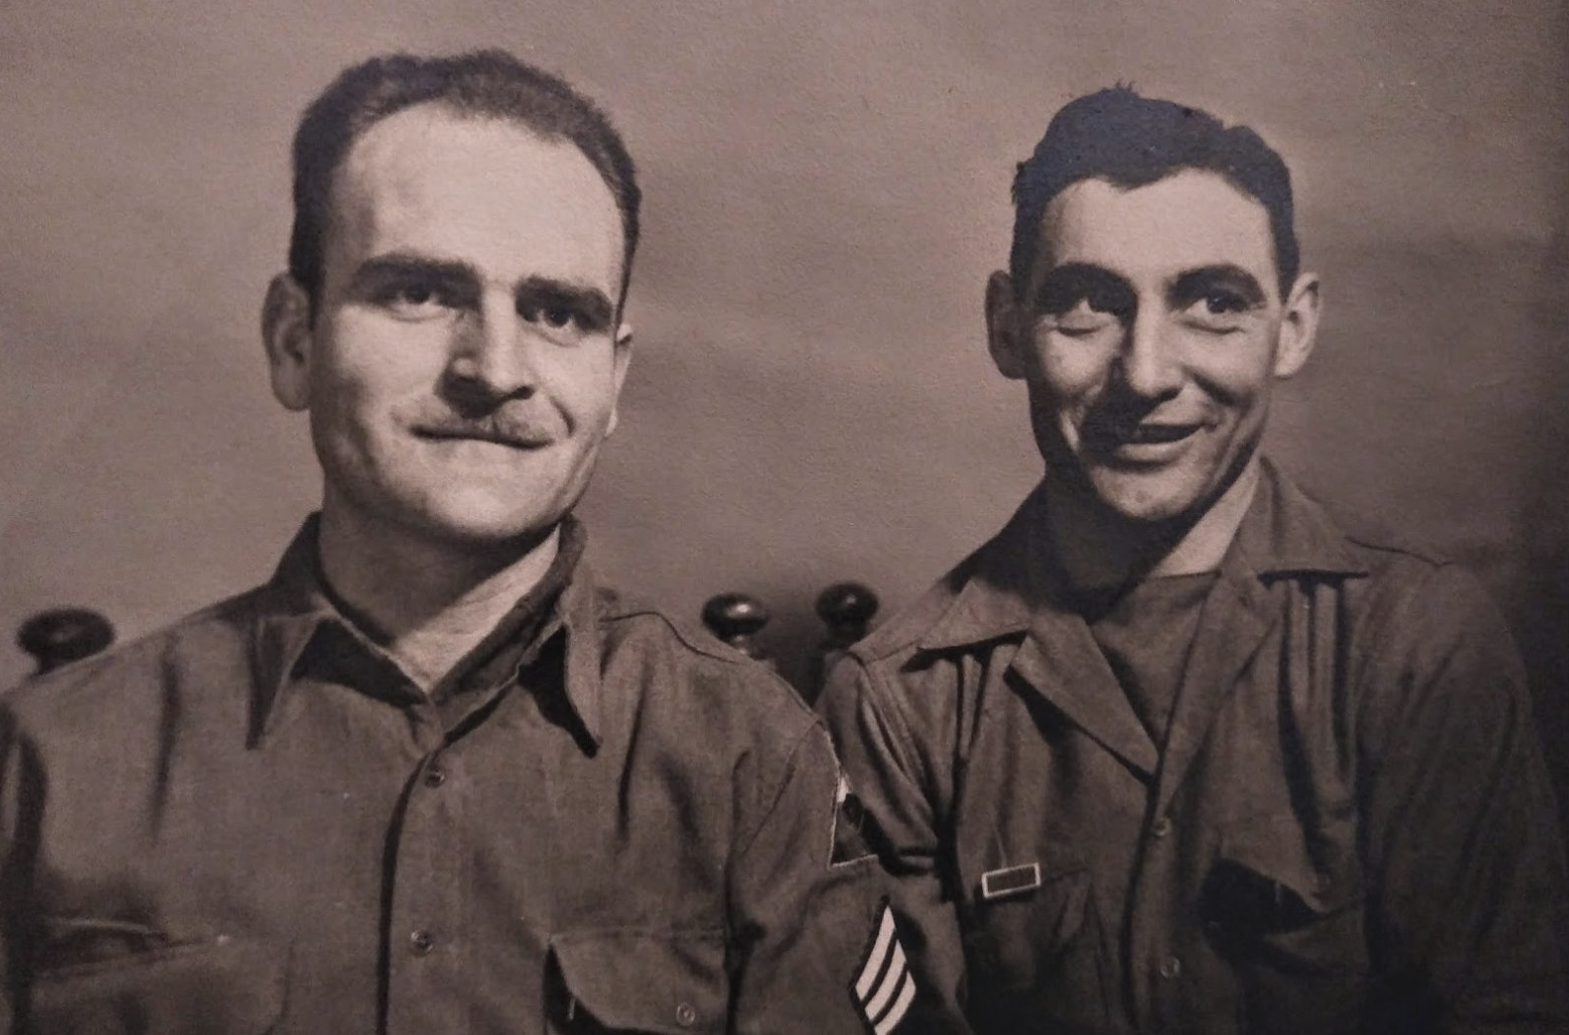 William Franklin Greenplate and Joel Winfred Rauls, circa 1945. Virginia Kruta/The Daily Caller